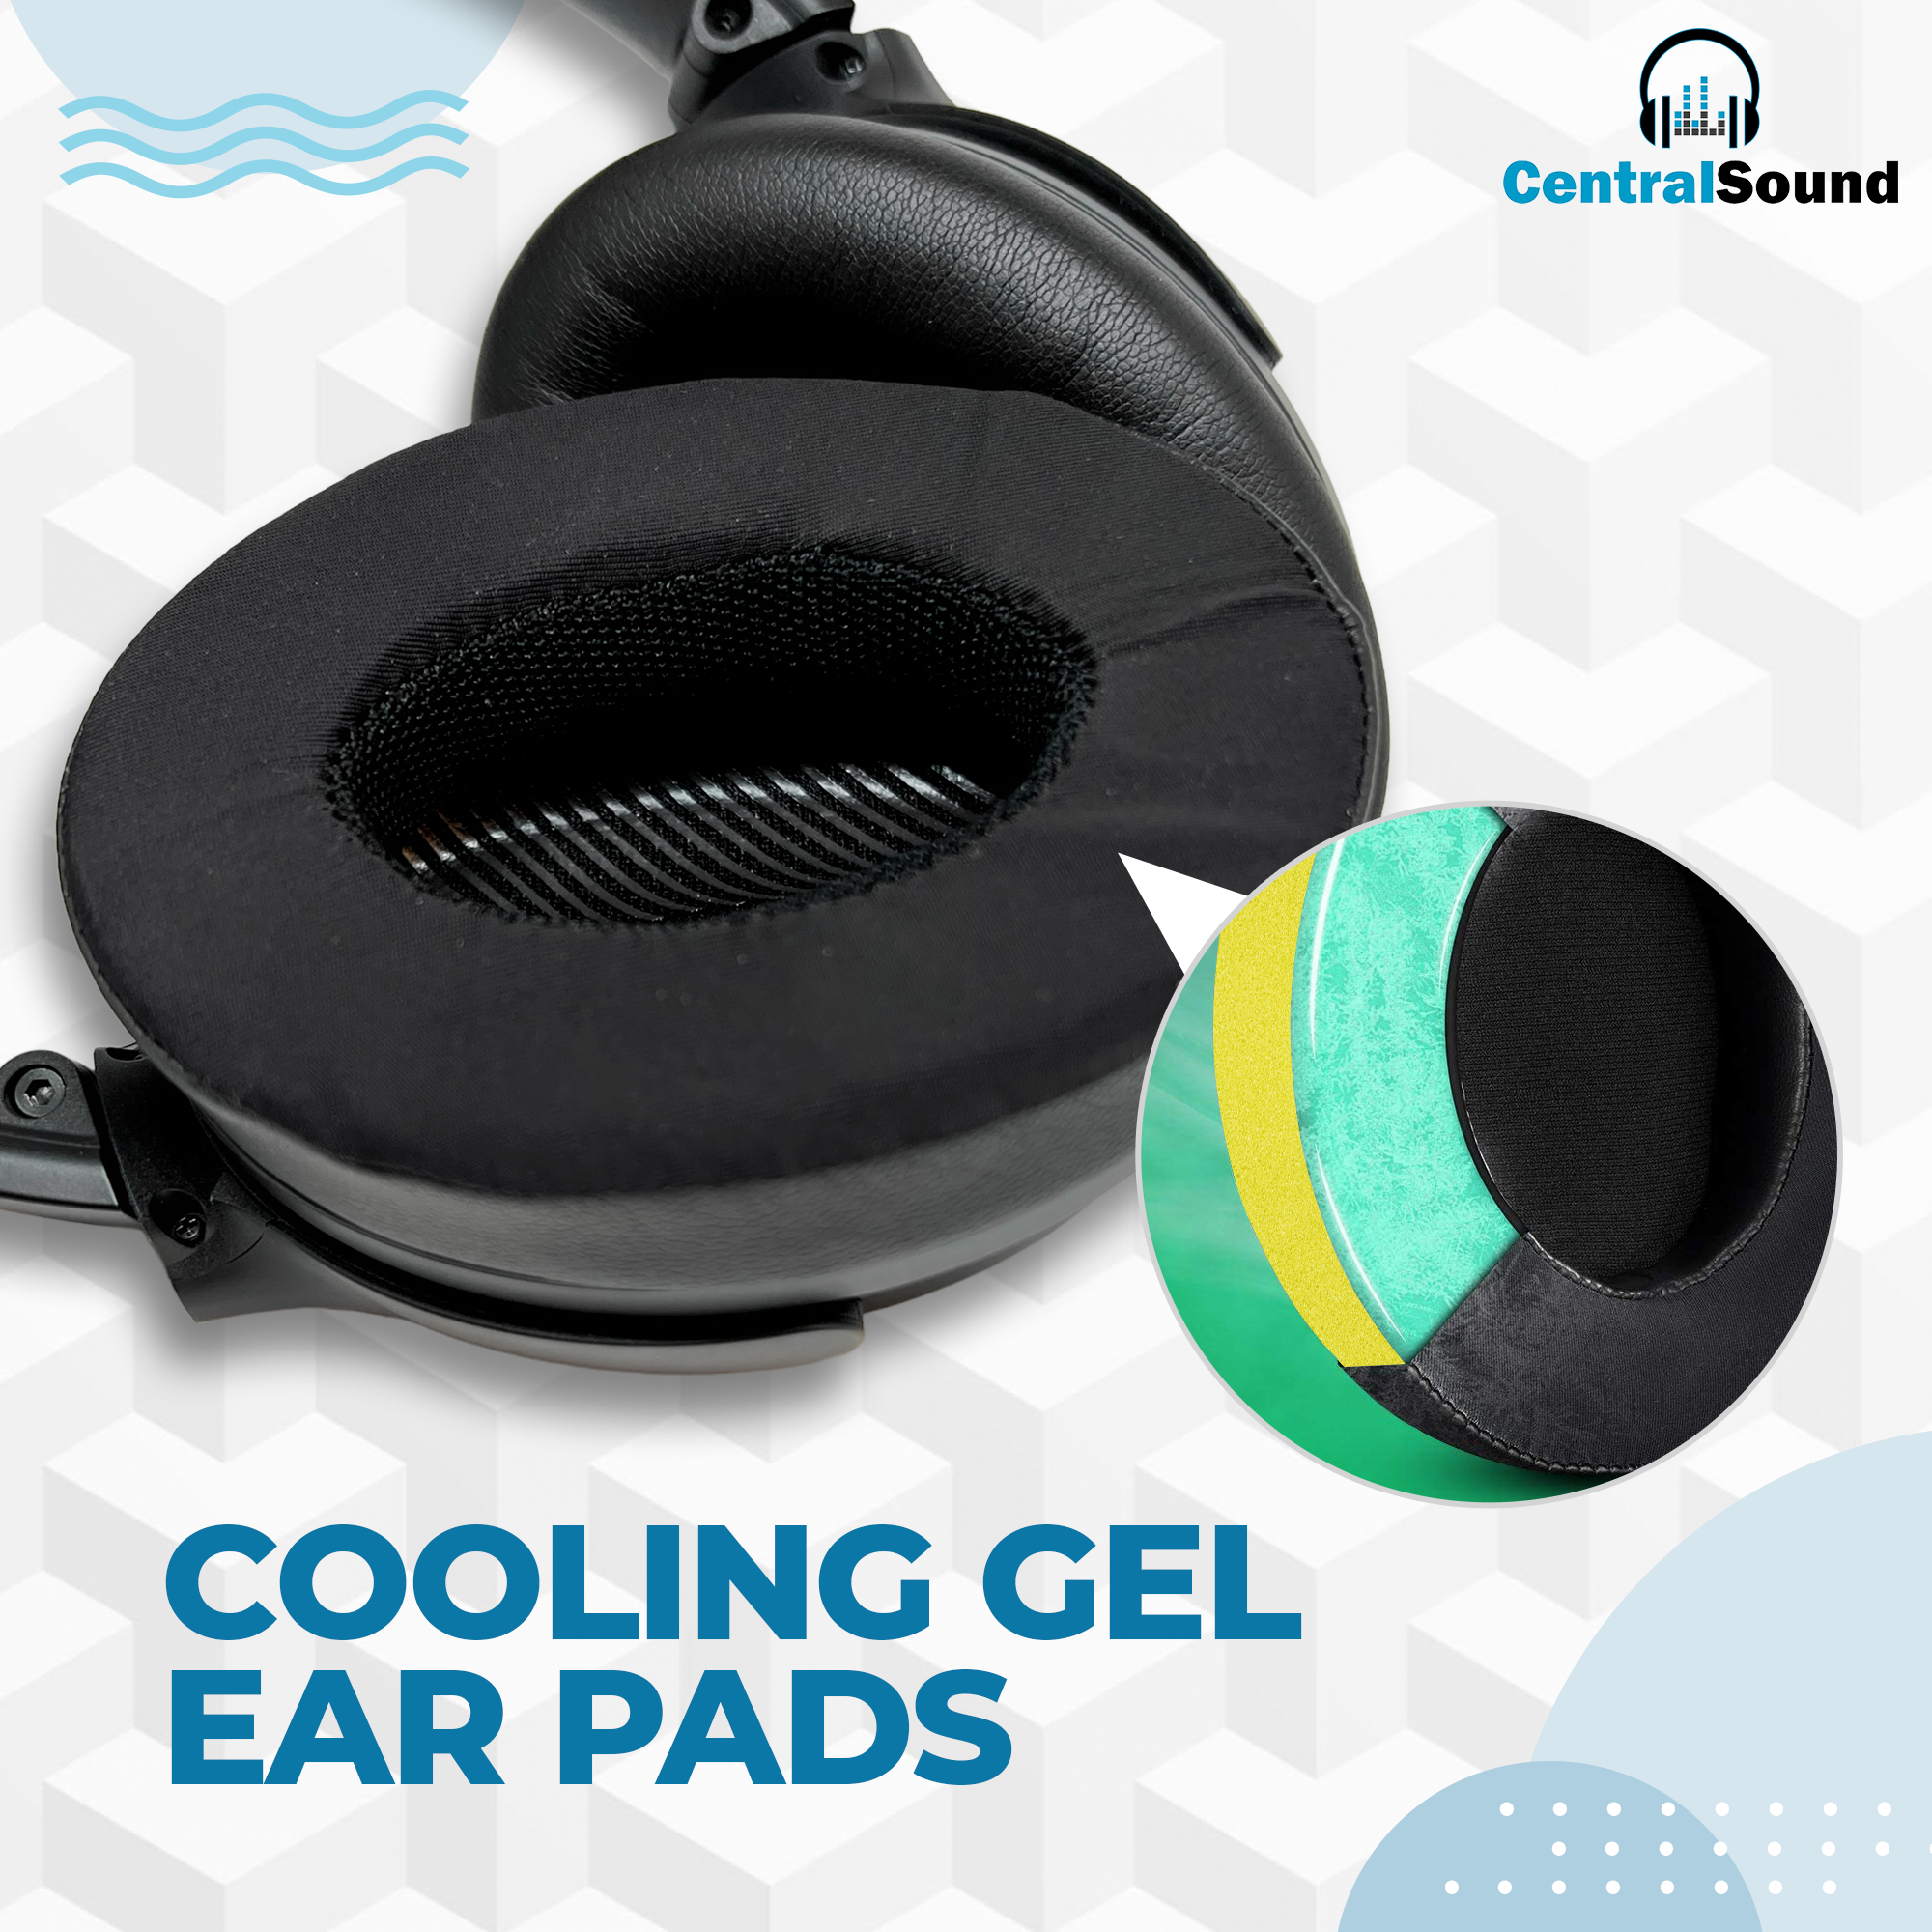 Bose QuietComfort 45 Headphones Ear Cushion Kit